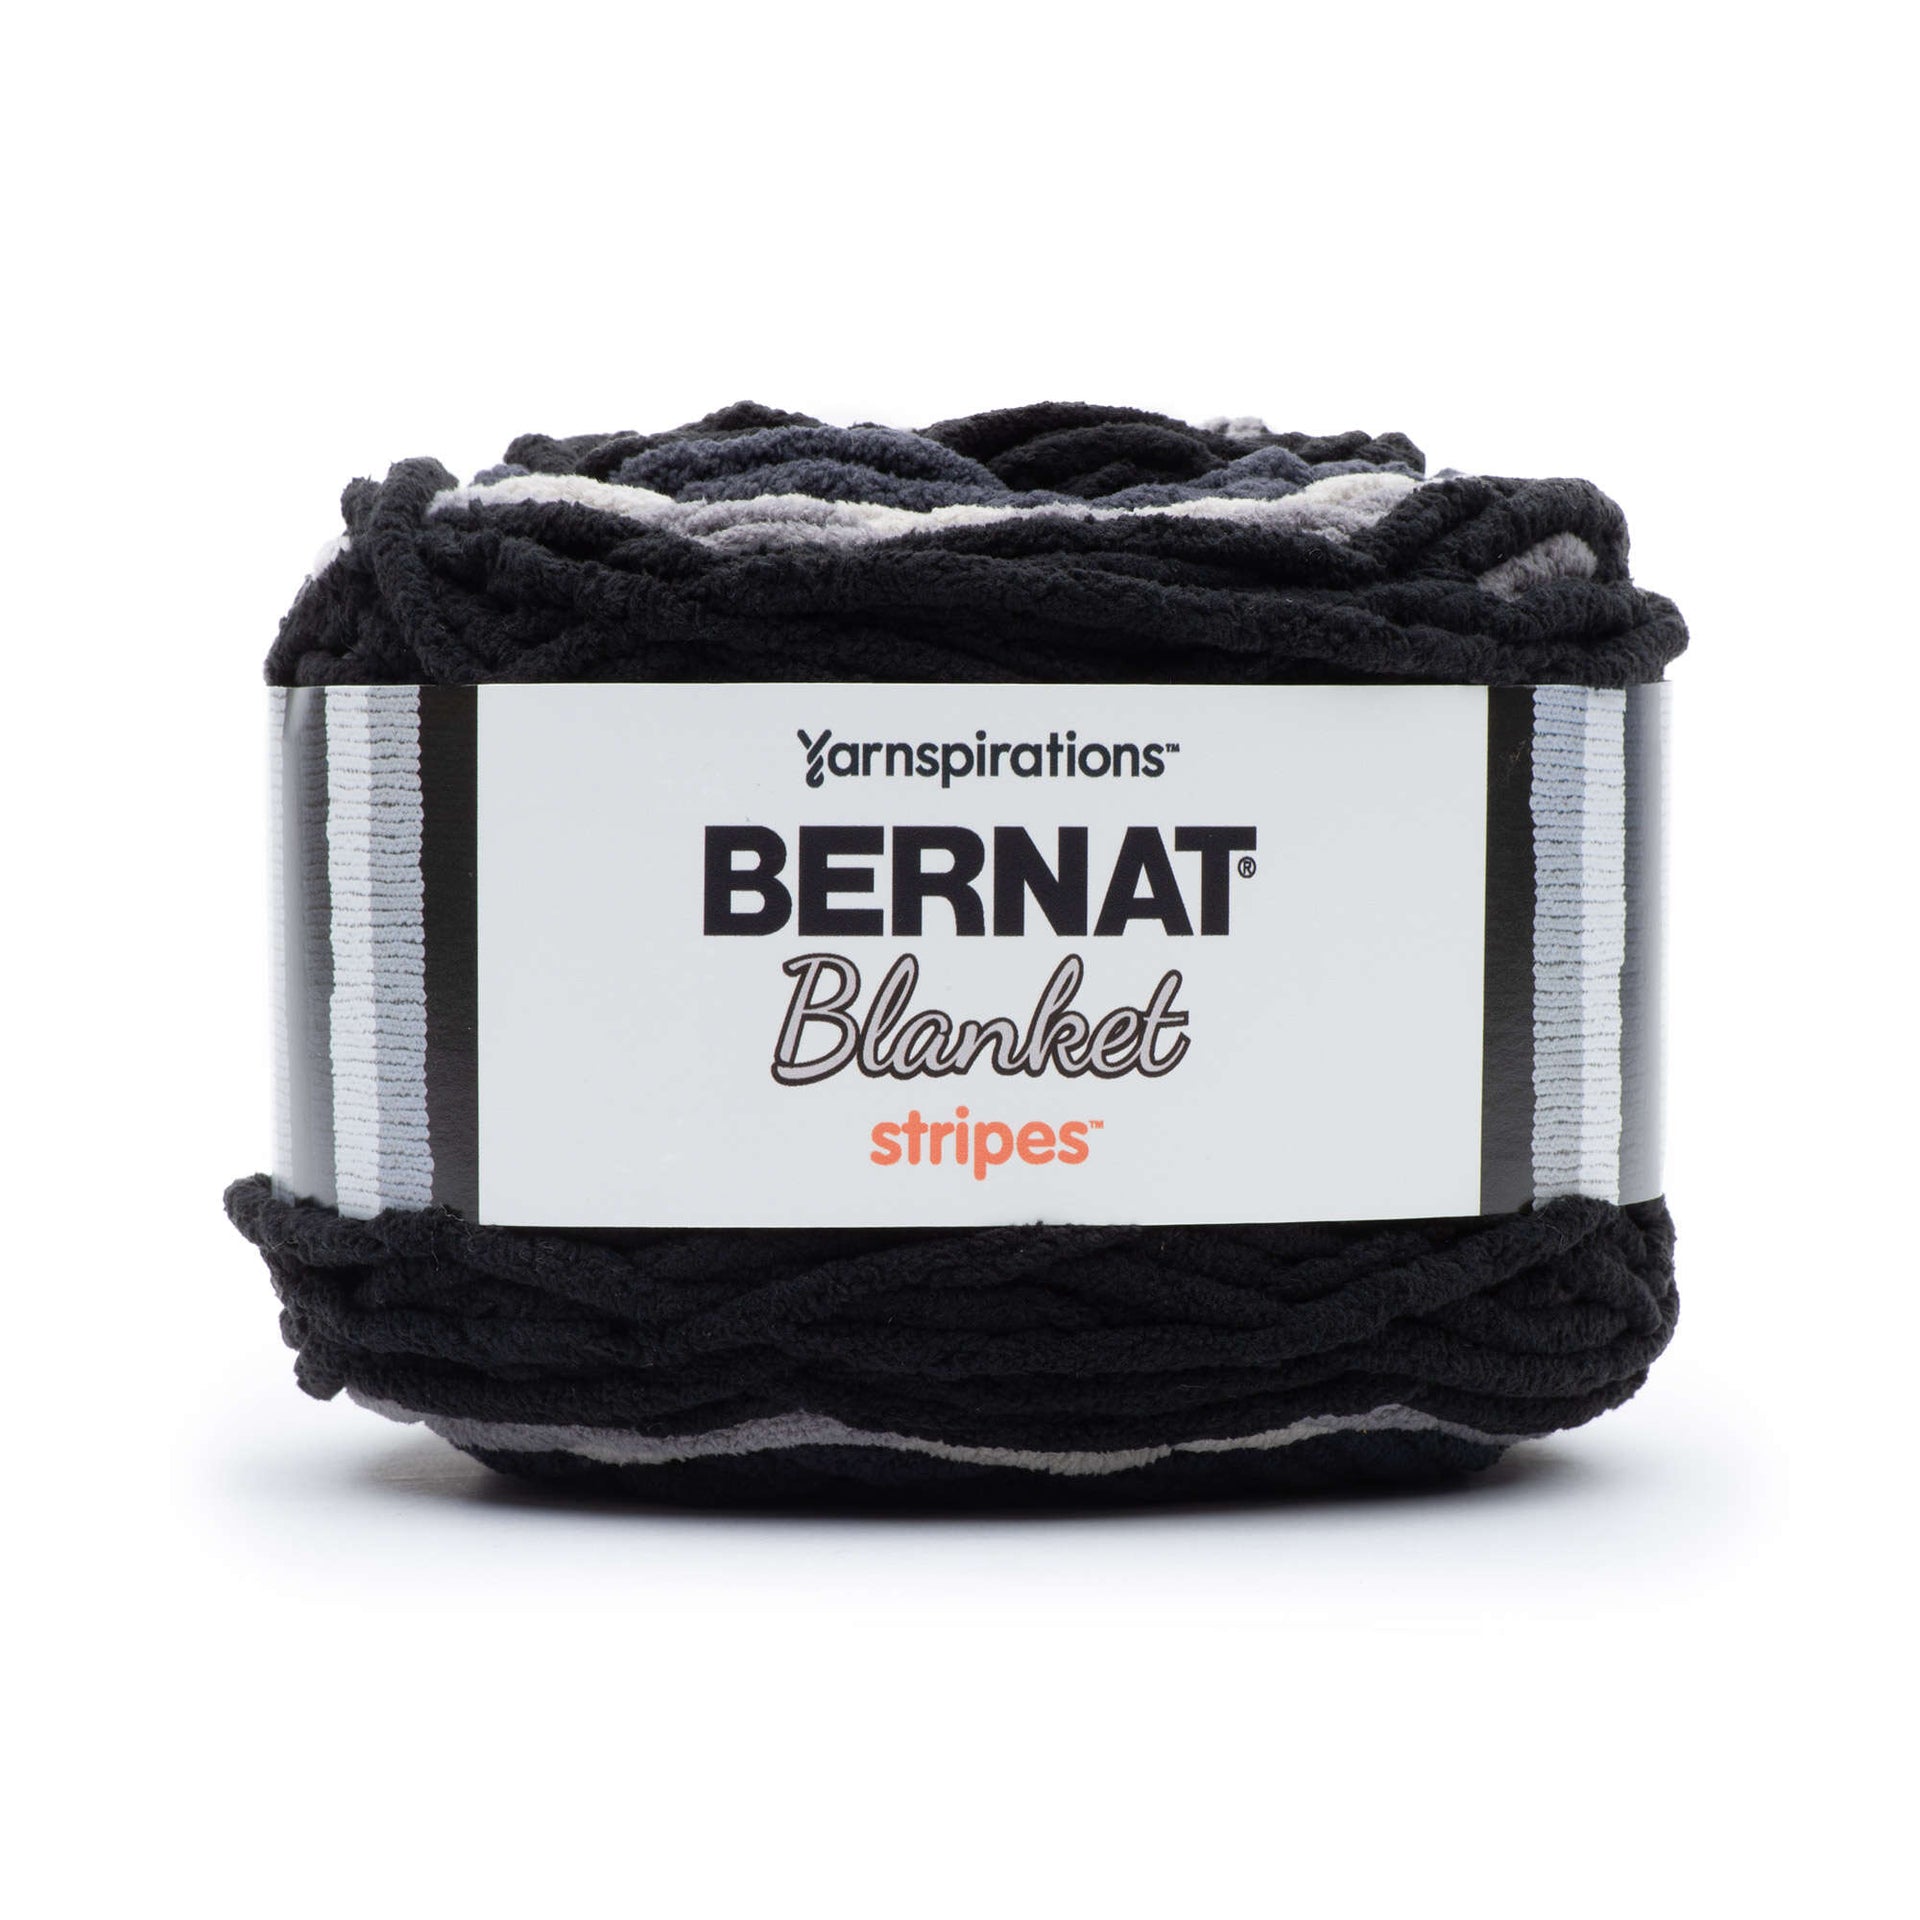 Bernat Blanket Stripes Yarn-Teal Deal, 1 count - Fry's Food Stores